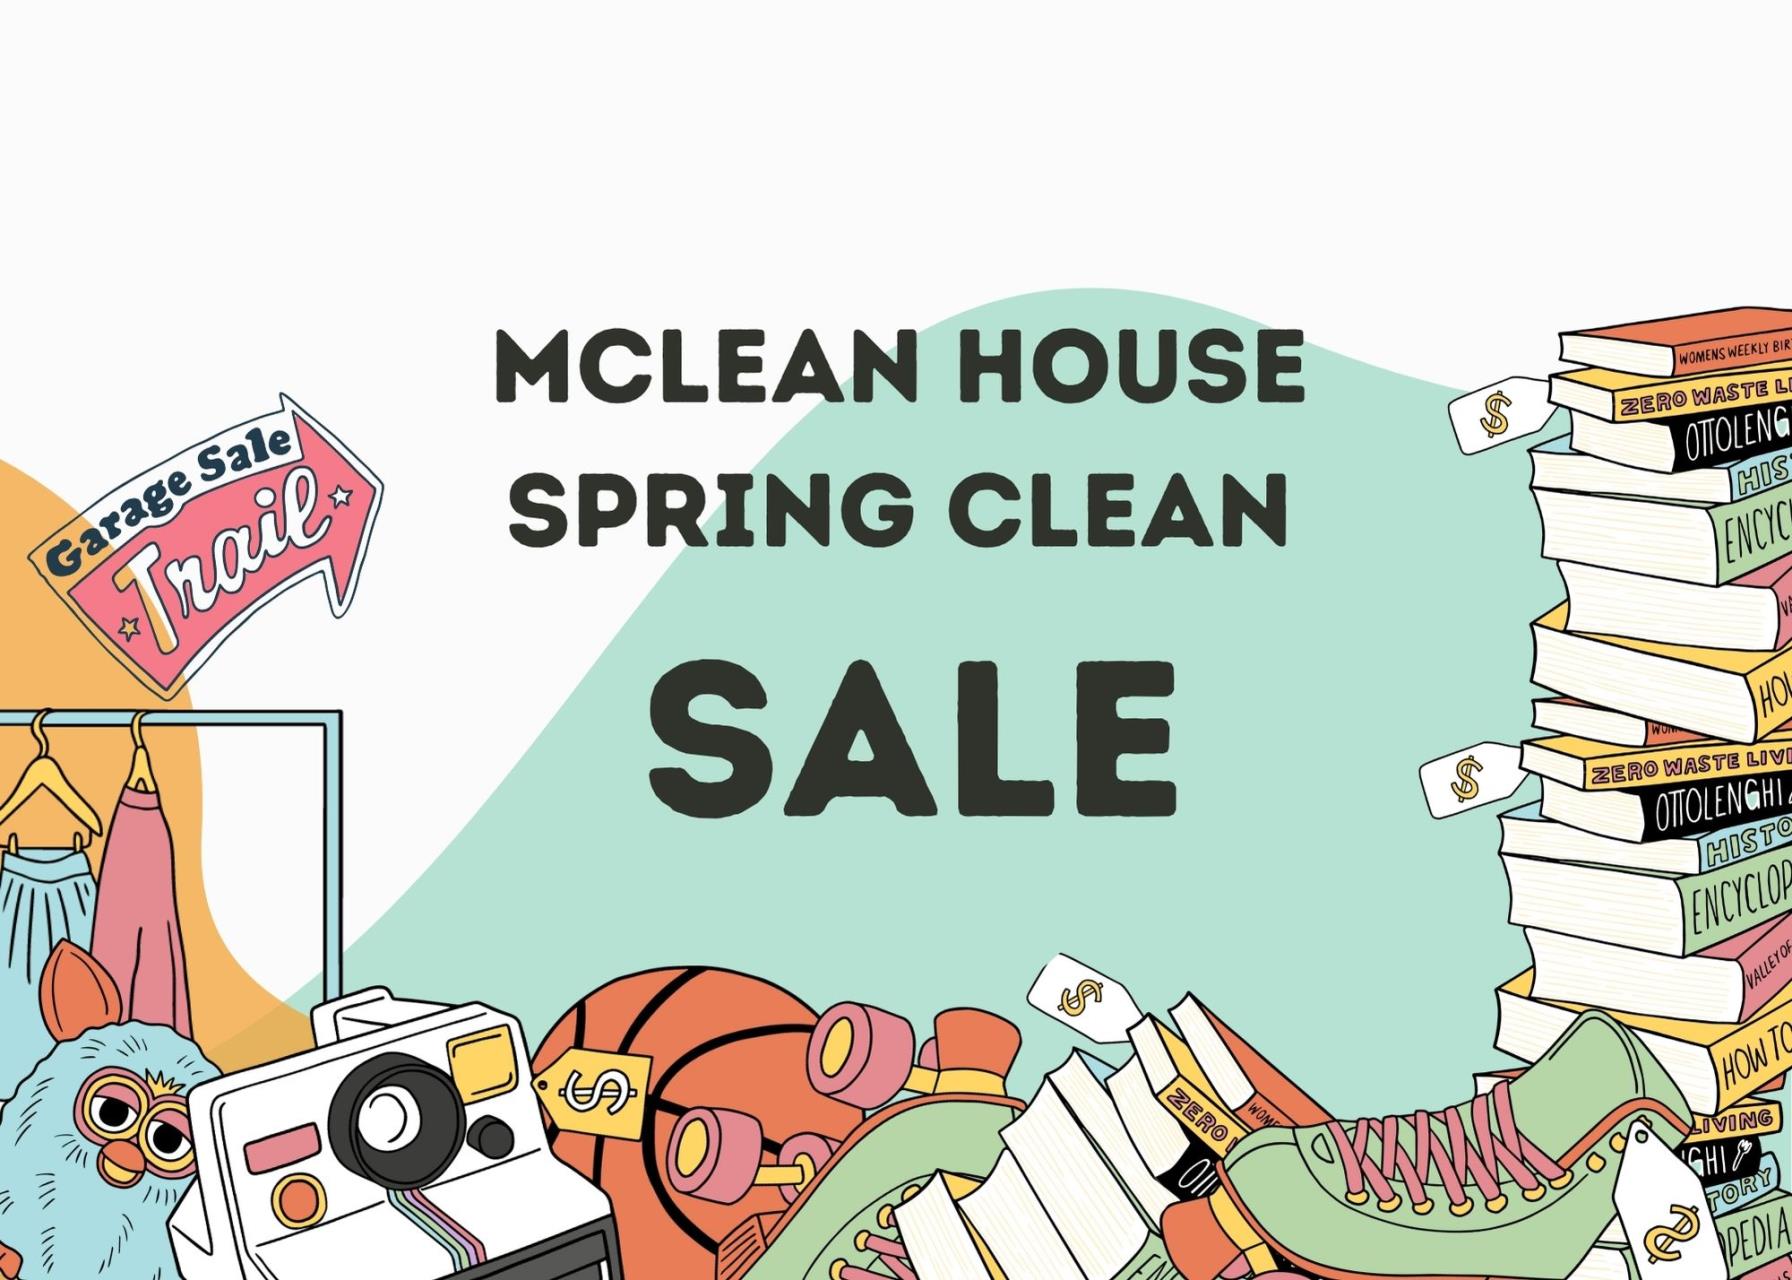 McLean House Spring Clean Saturday 13 November